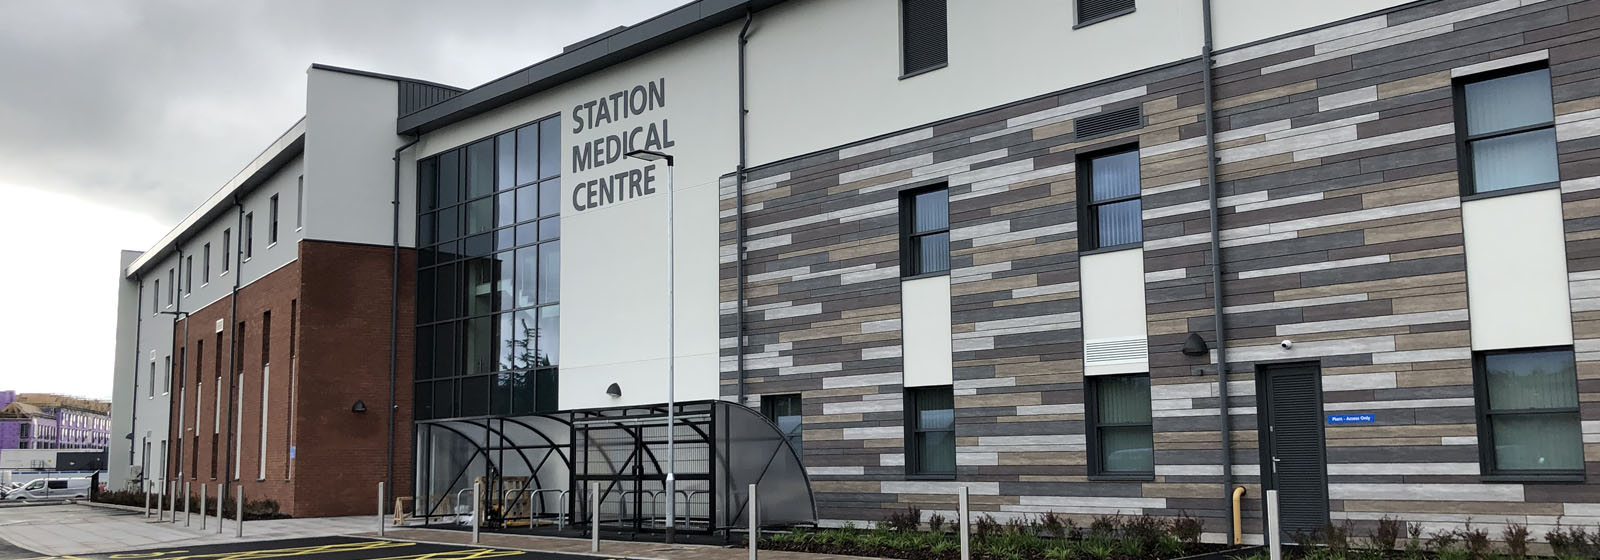 Station Medical Centre, Hereford